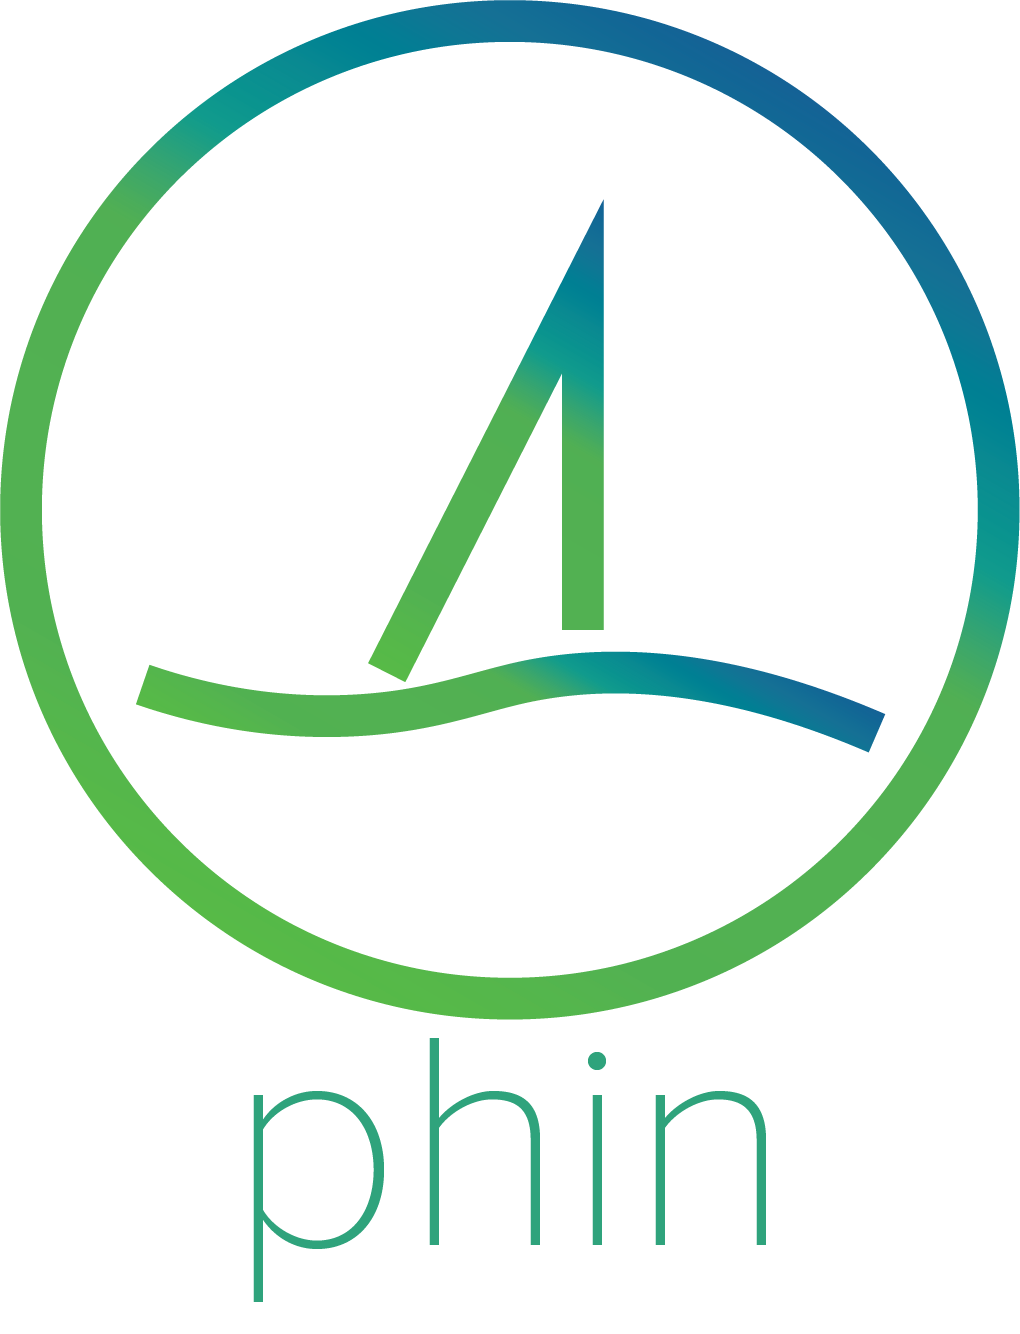 phin logo